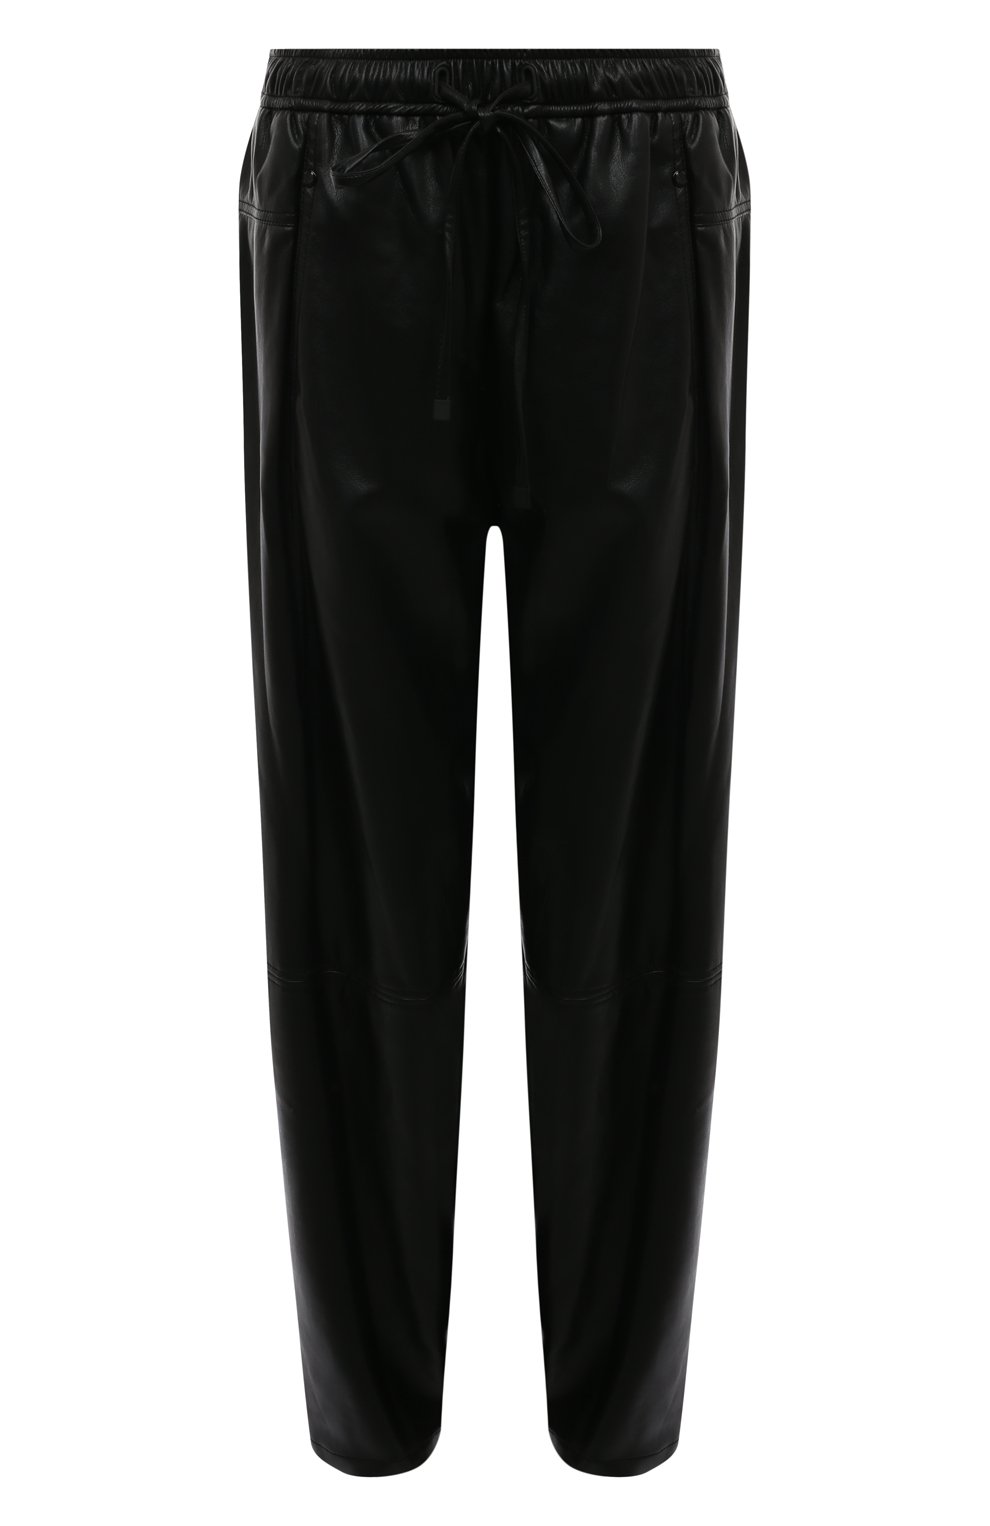 Женские брюки из экокожи LOW CLASSIC черного цвета, арт. L0W22PF_PT06BK | Фото 1 (Силуэт Ж (брюки и джинсы): Широкие; Длина (брюки, джинсы): Стандартные; Женское Кросс-КТ: Брюки-одежда; Материал внешний: Синтетический материал; Стили: Гранж; Кросс-КТ: экокожа)